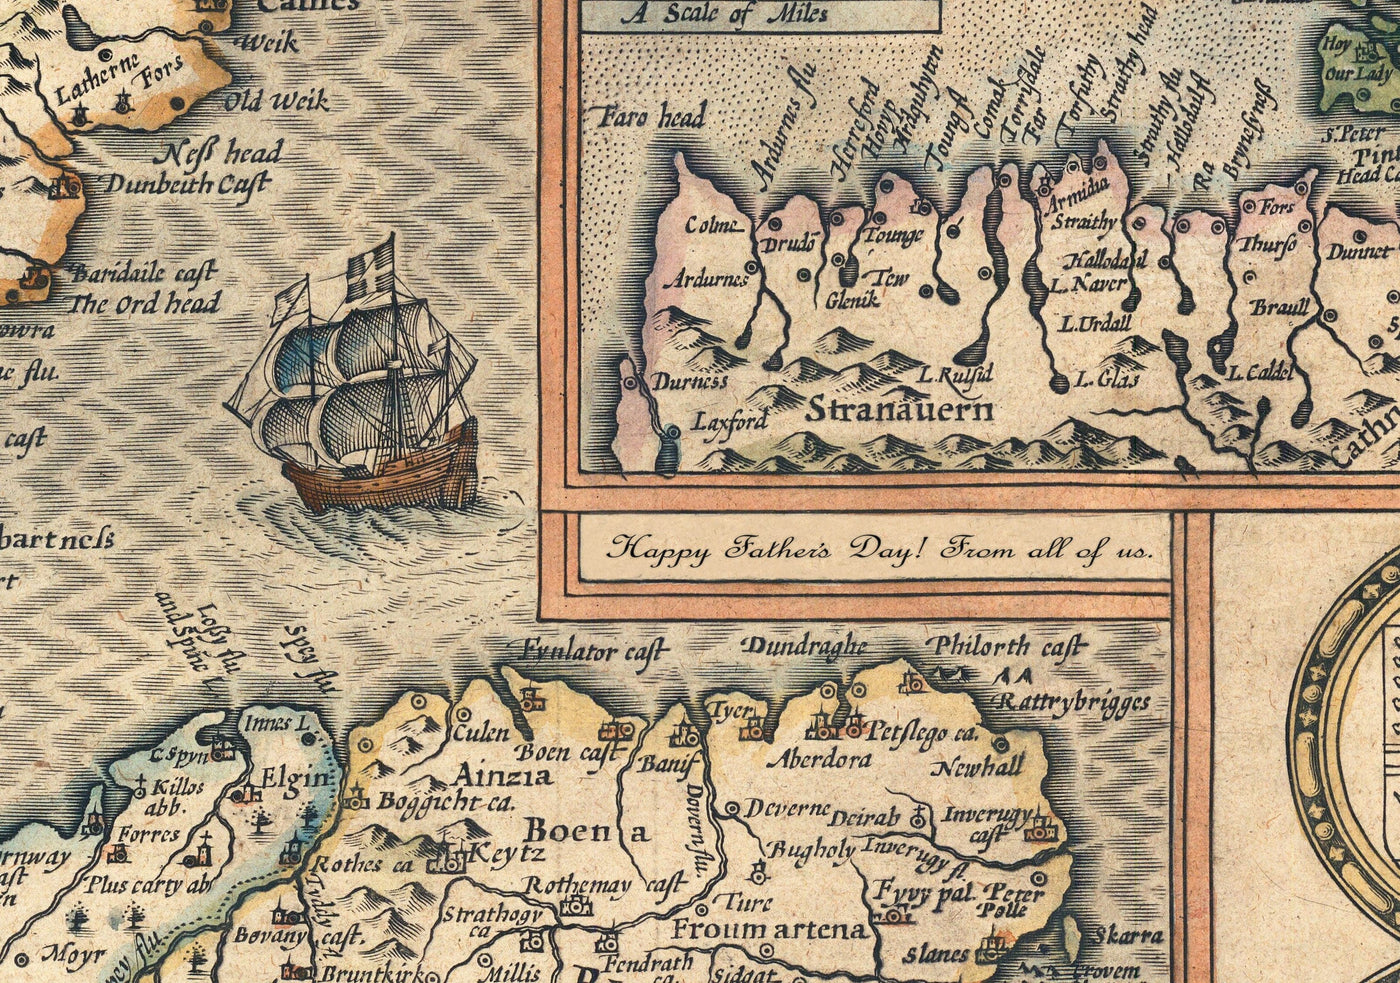 Mapa antiguo de Cheshire en 1611 por John Speed ​​- Chester, Warrington, Crewe, Runcorn, Liverpool, Merseyside